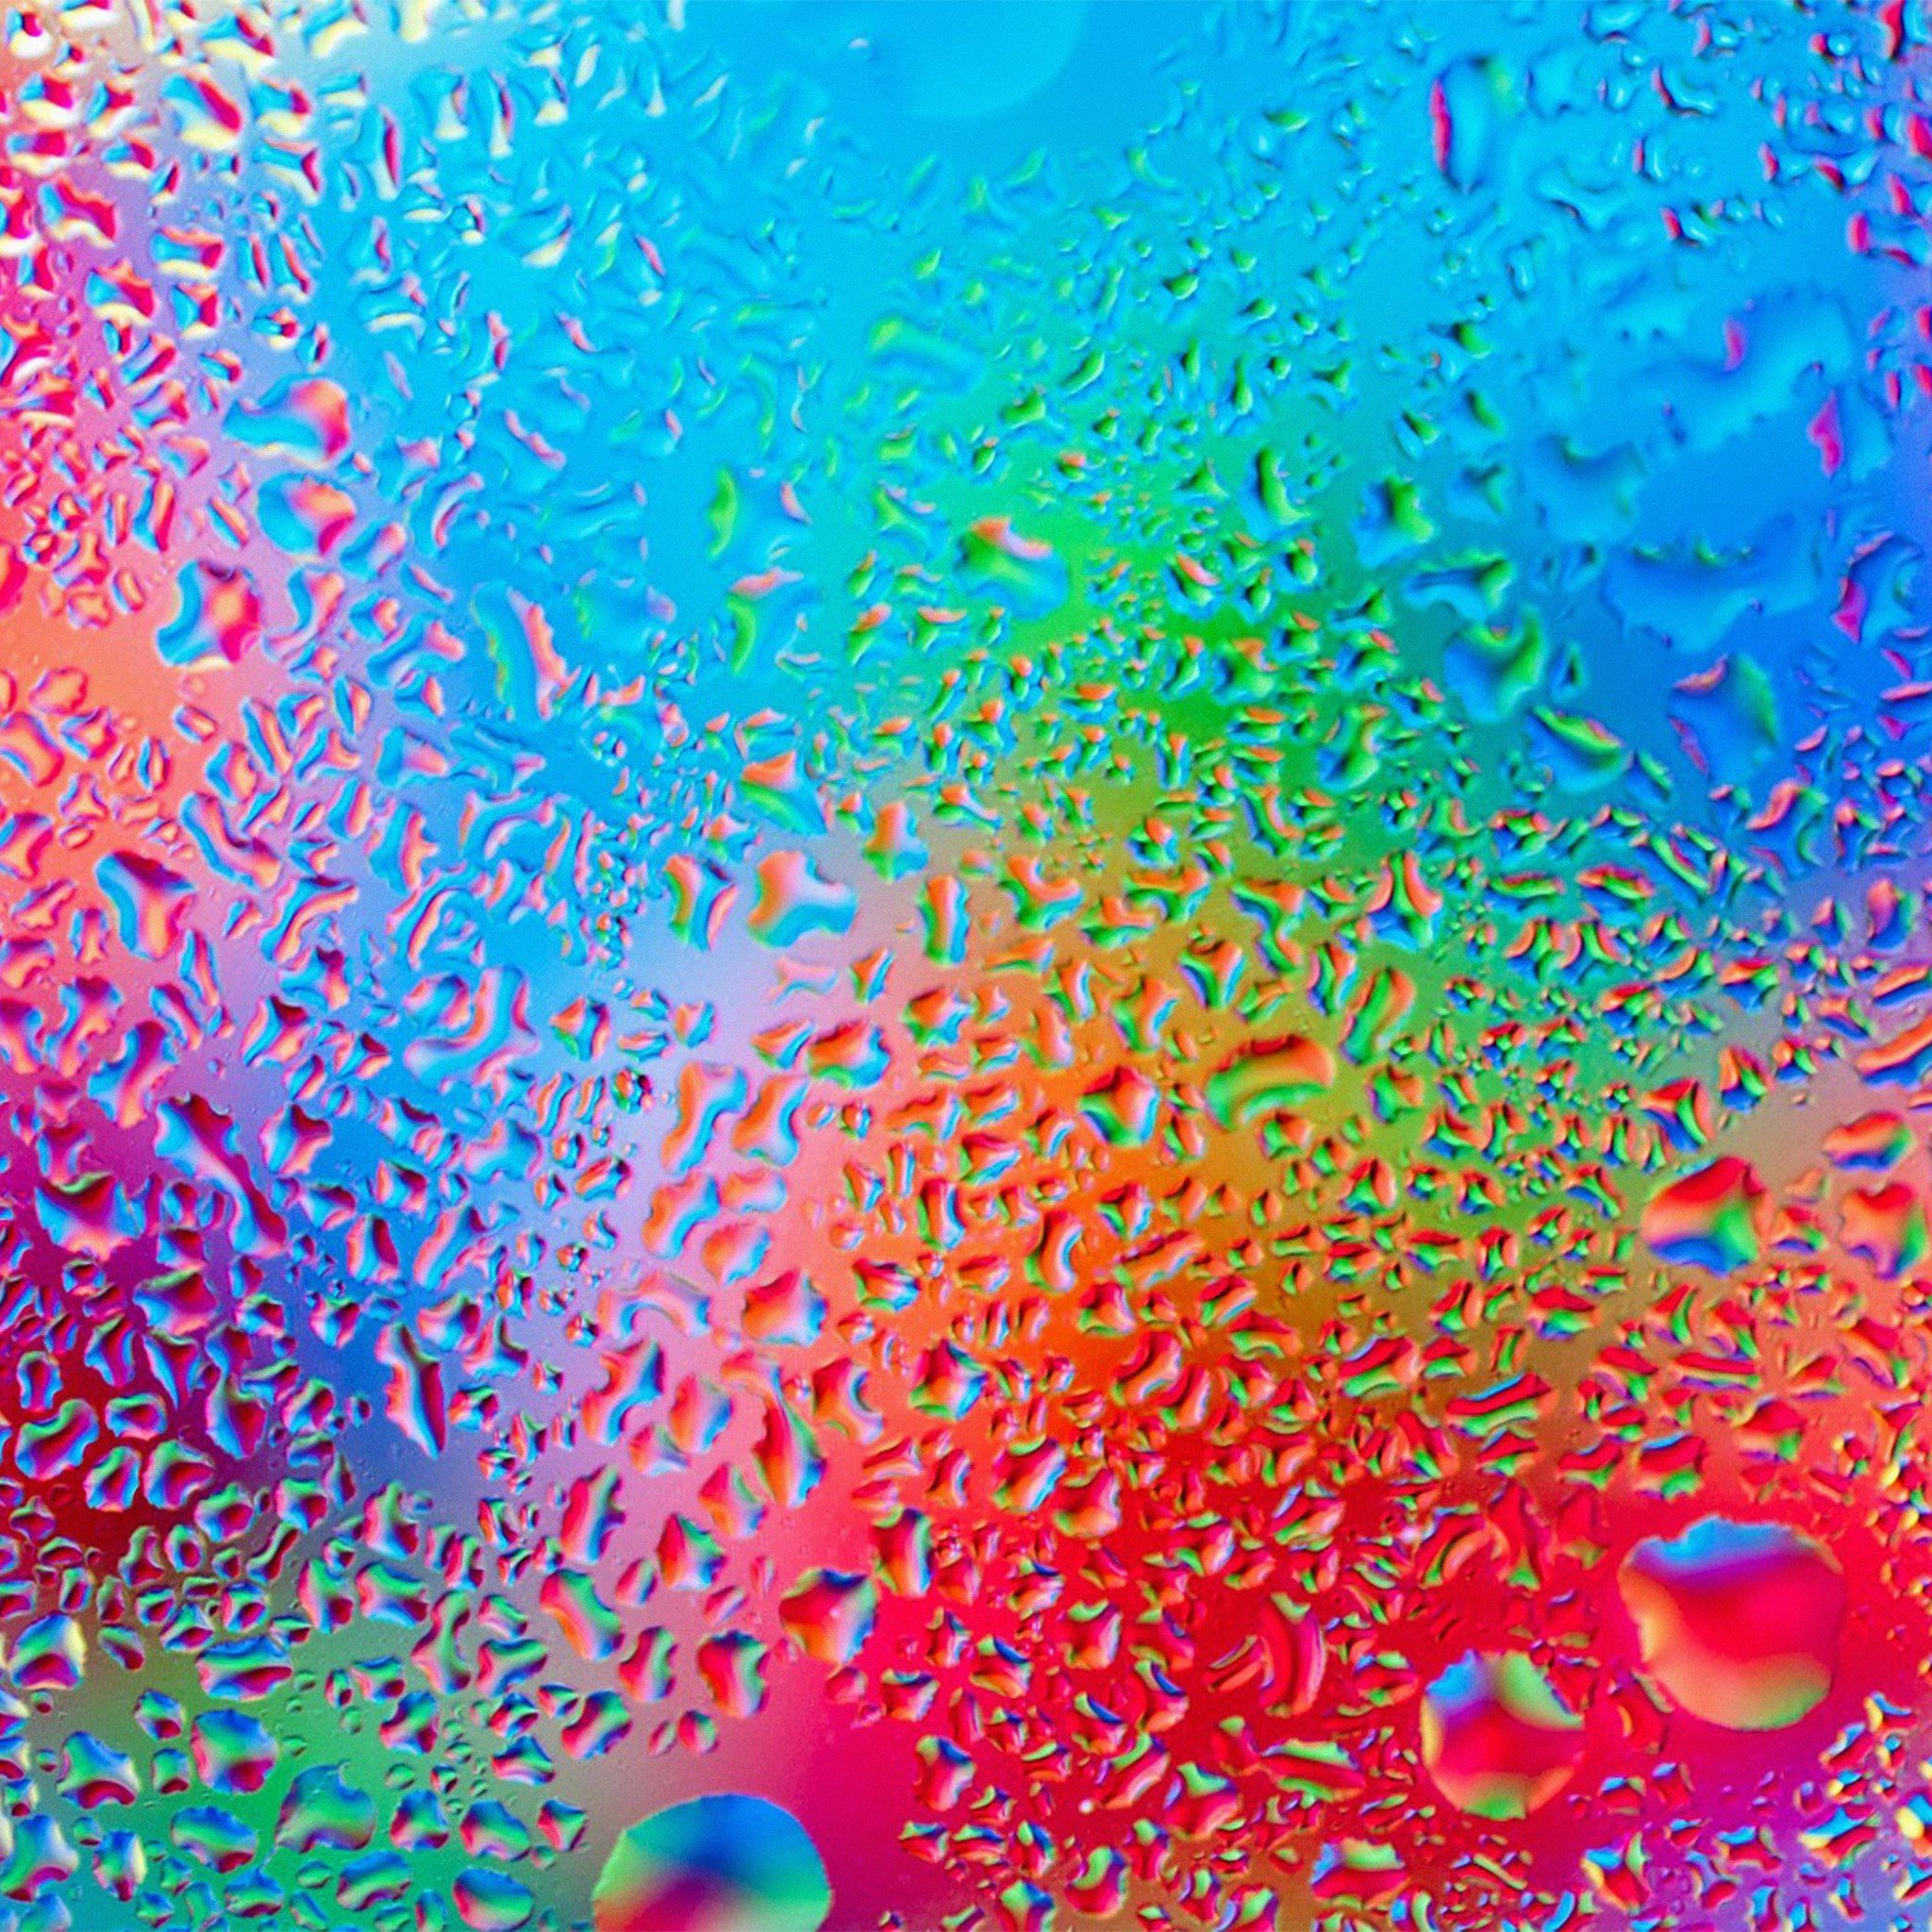 A colorful rain drops on the window - Rainbows